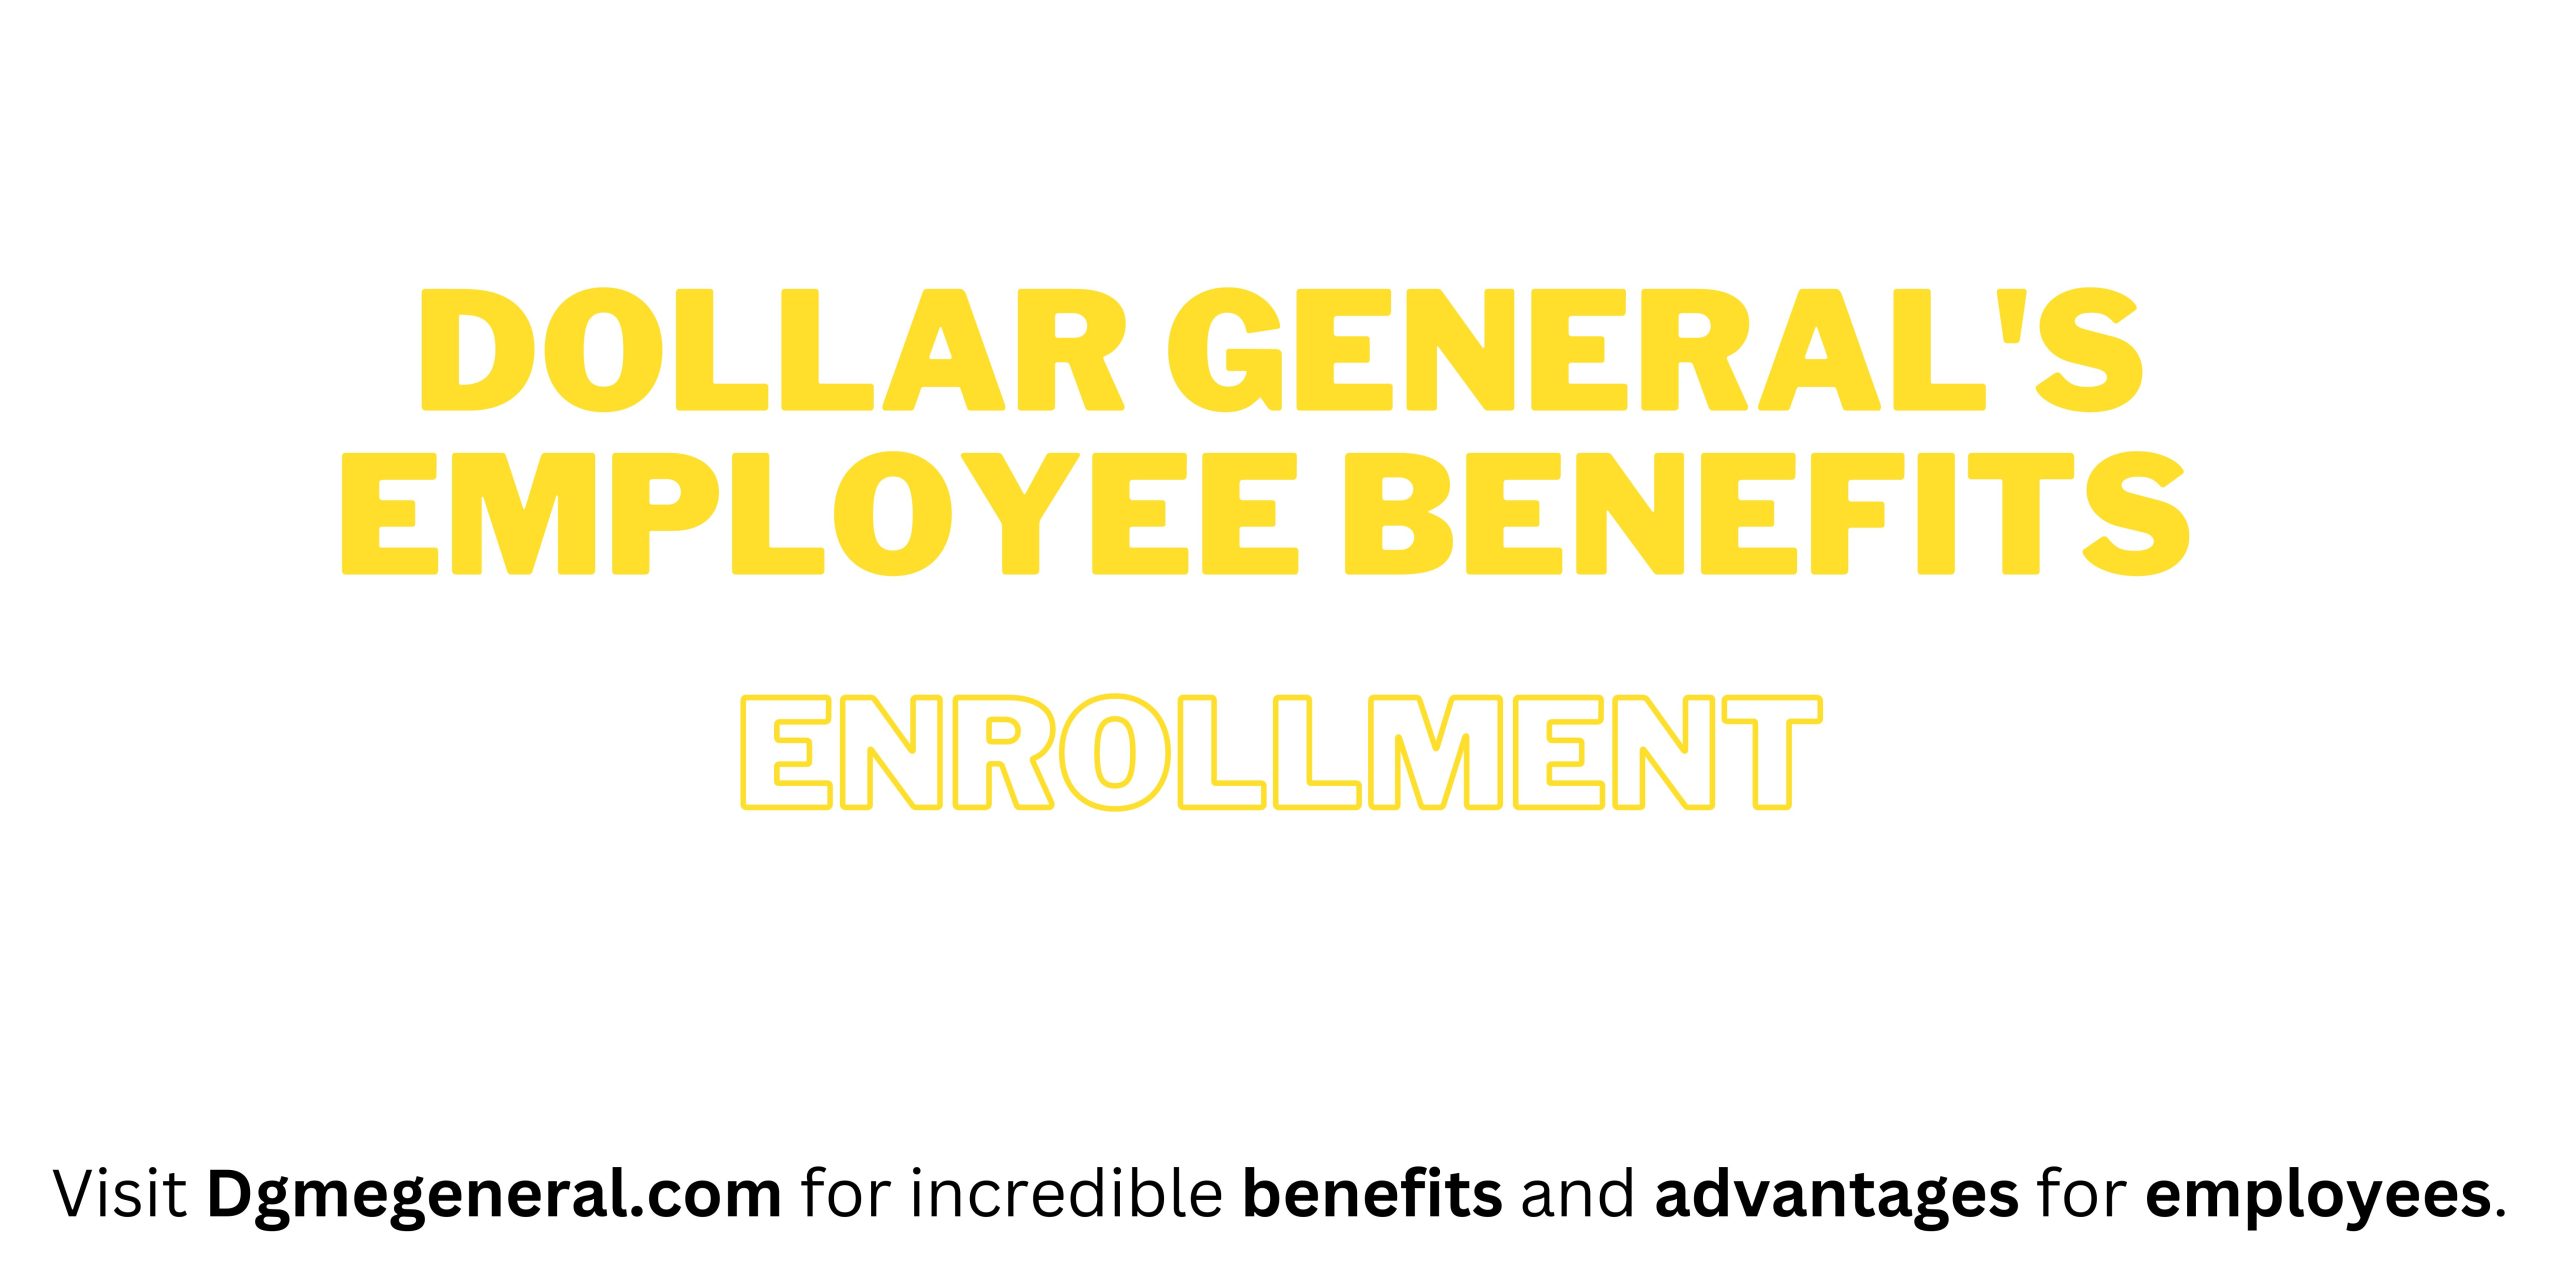 Dollar General's Employee Benefits Enrollment